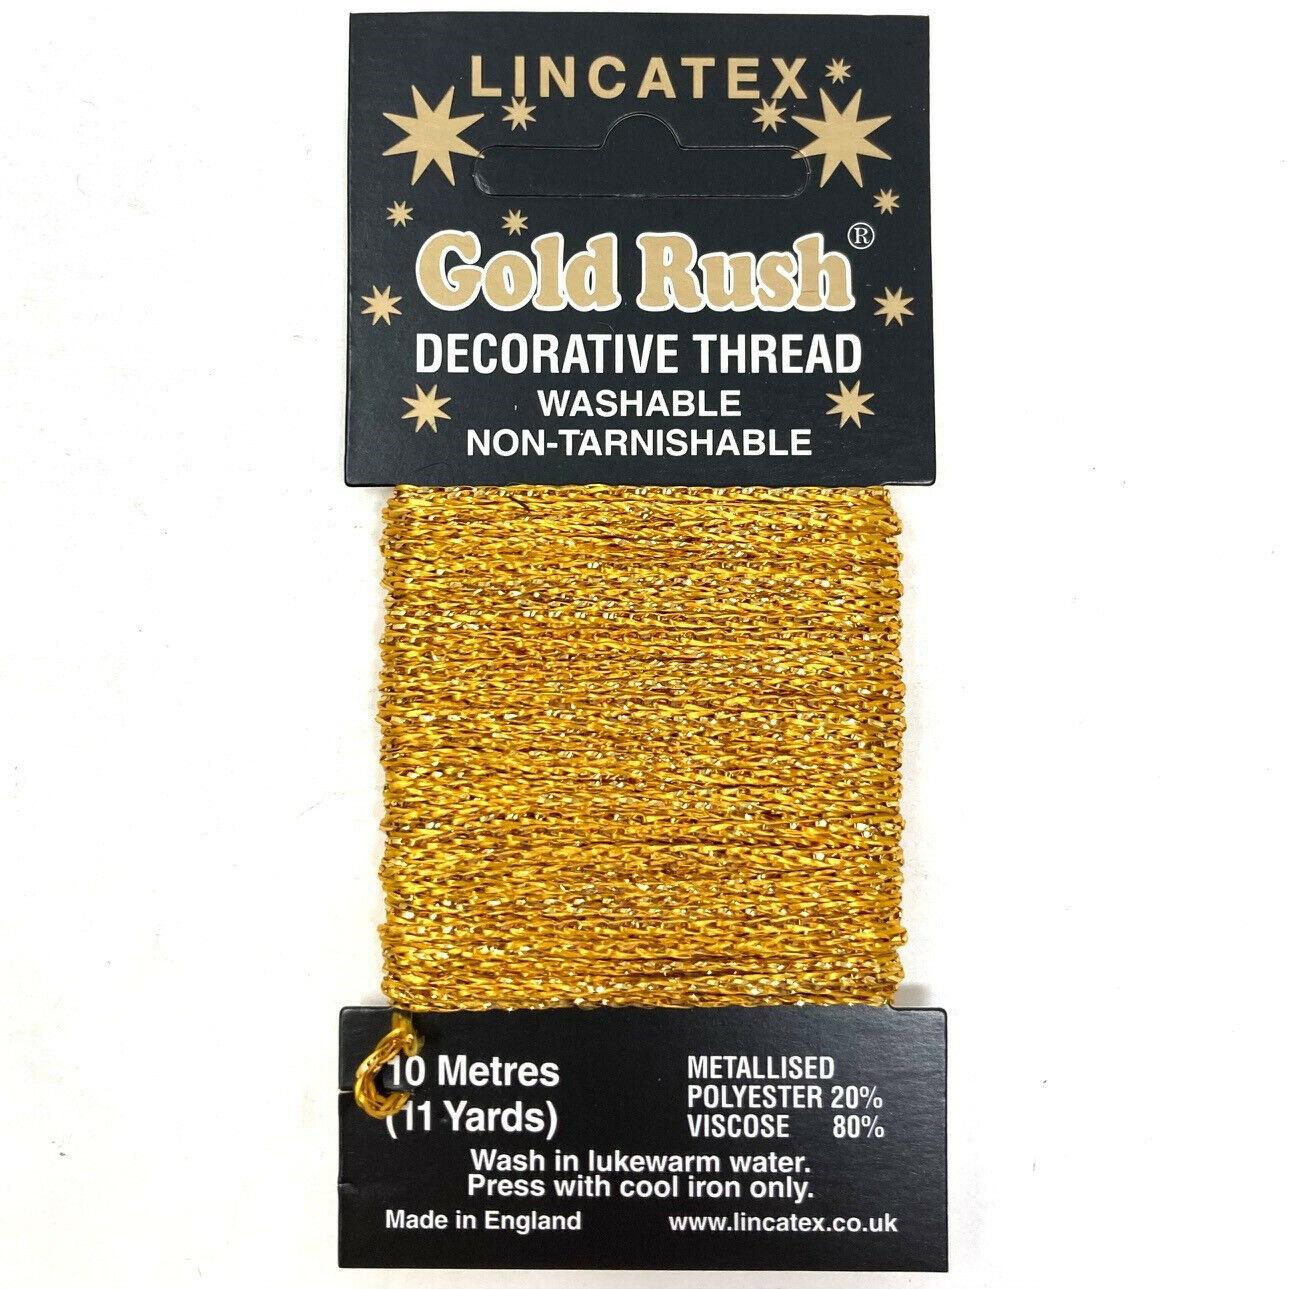 Lincatex Gold Rush